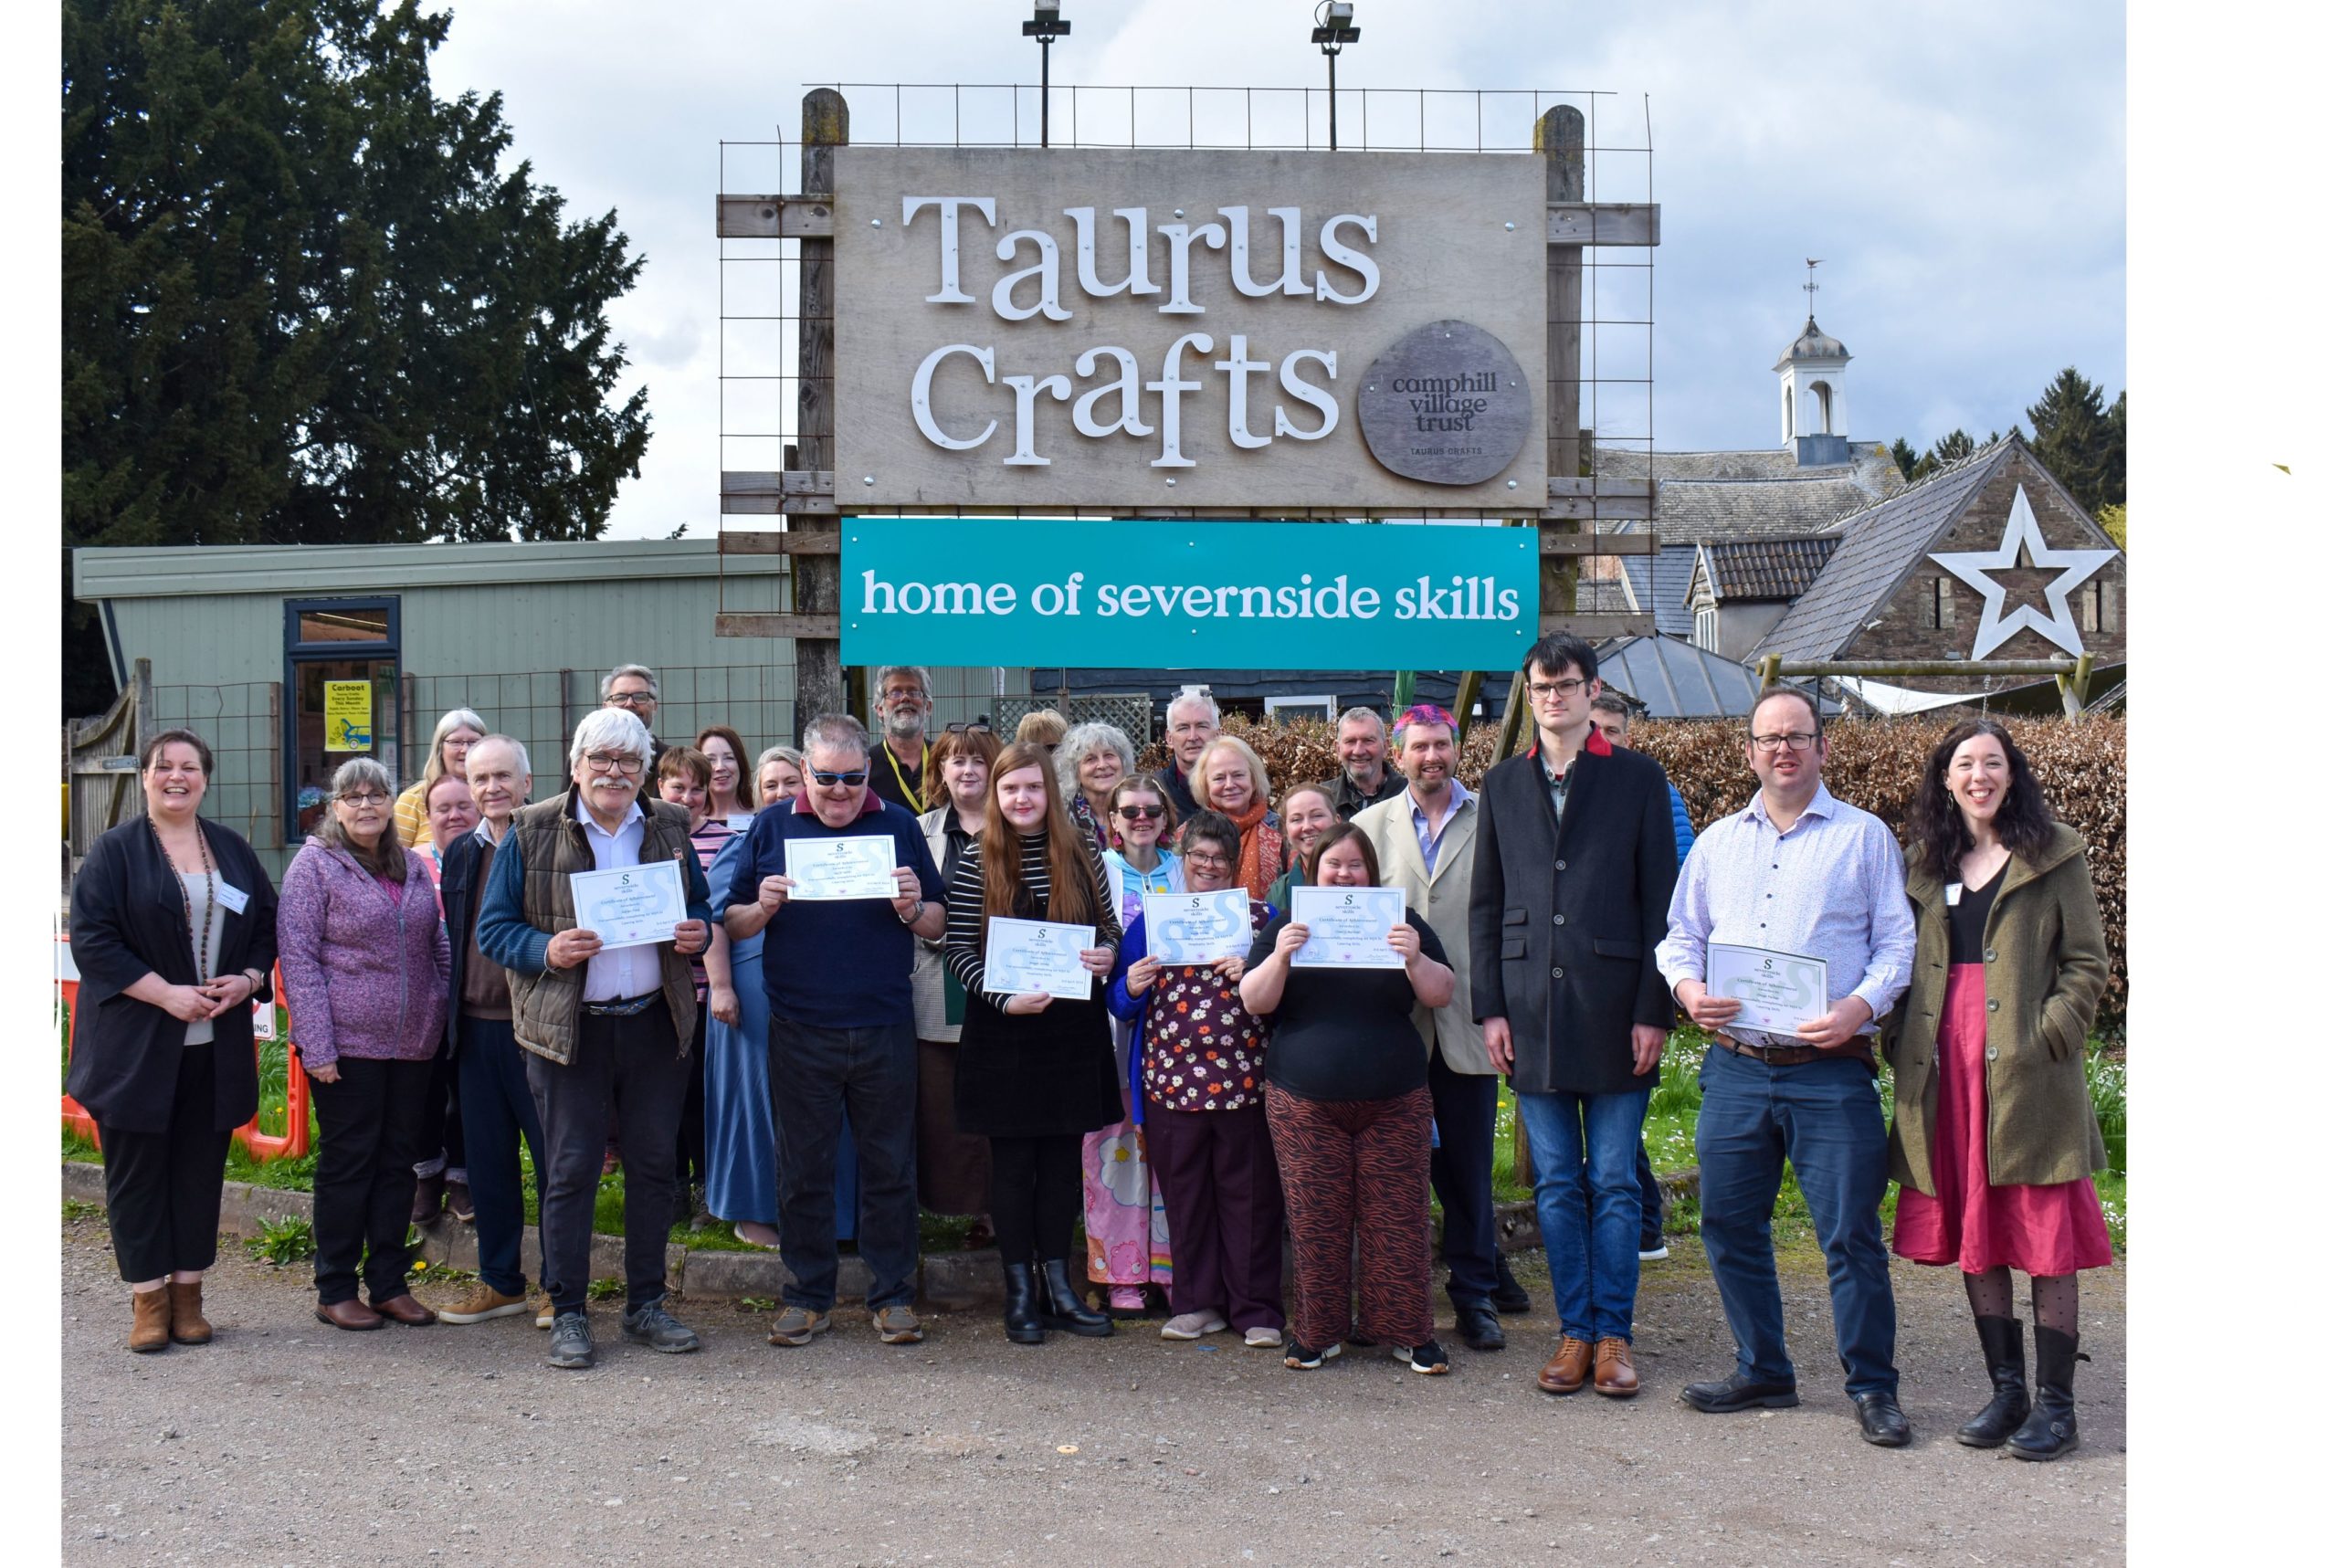 Severnside Skills graduation at Taurus Crafts, Camphill Village Trust